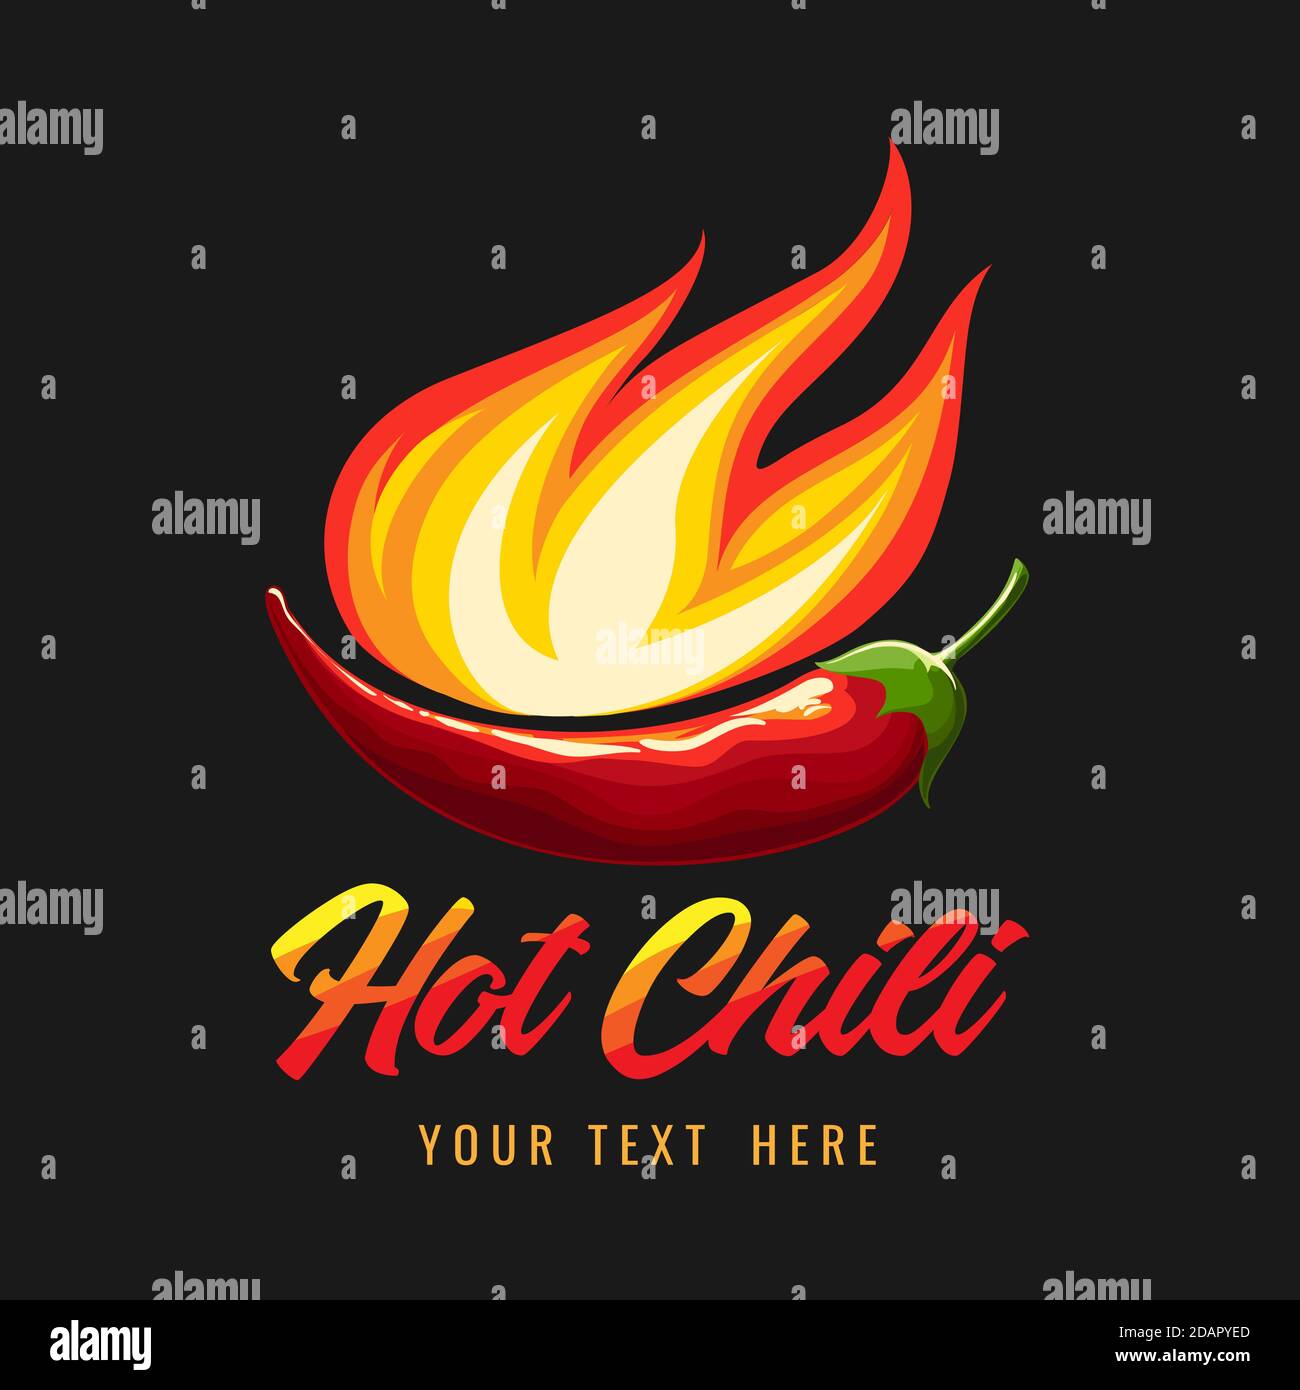 Burning Chili Pepper eblem or poster template.Vector illustration Stock Vector